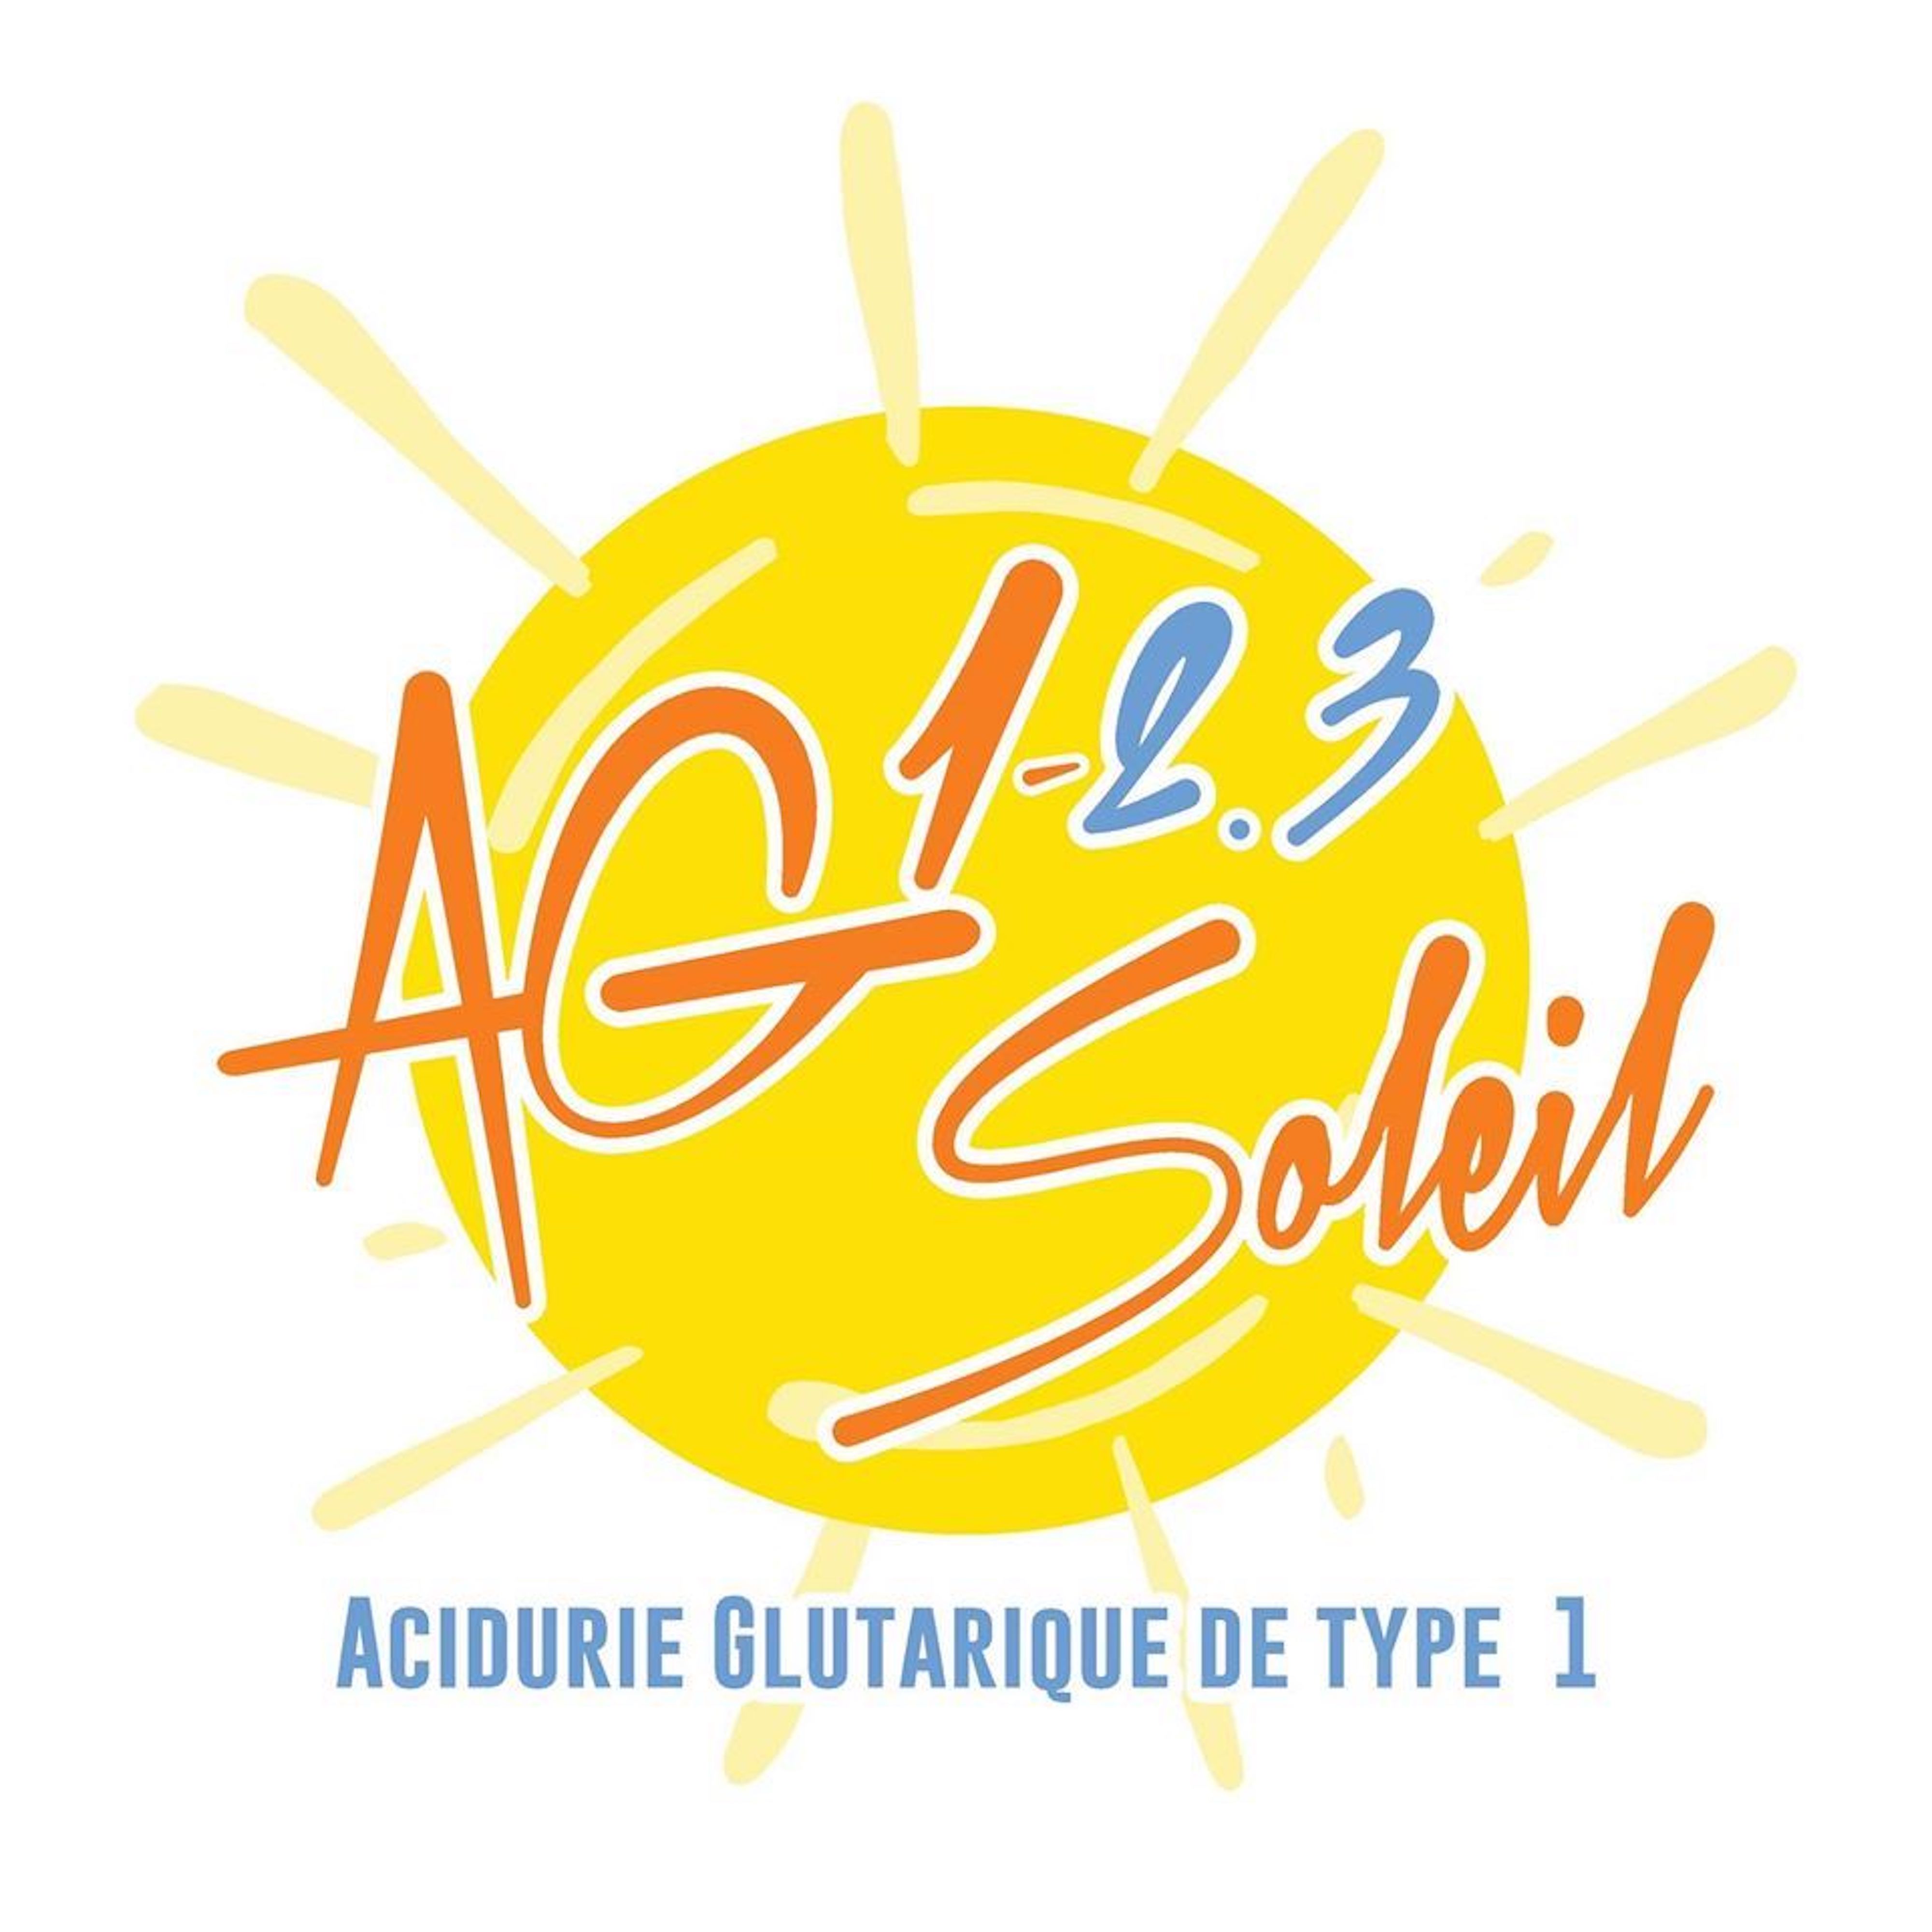 AG 123 Soleil logo